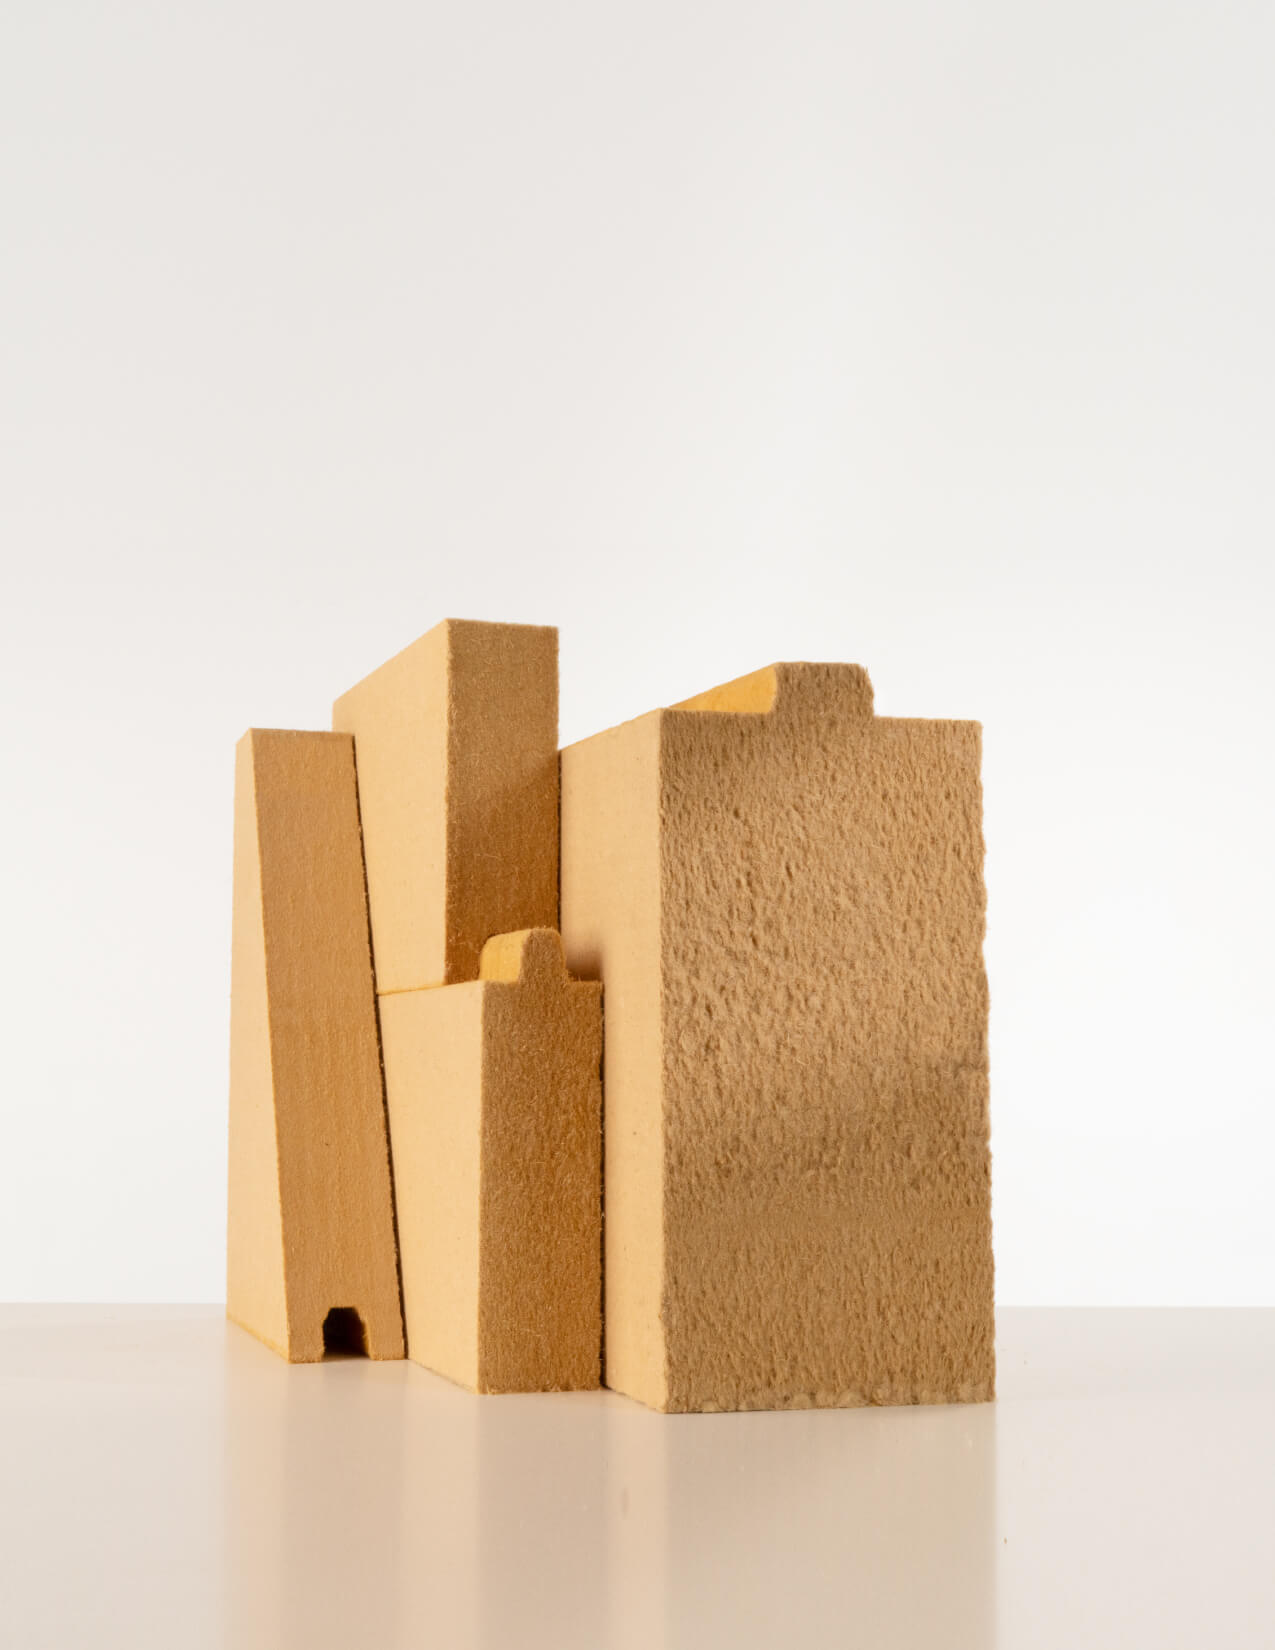 Geometric blocks of wood fiber